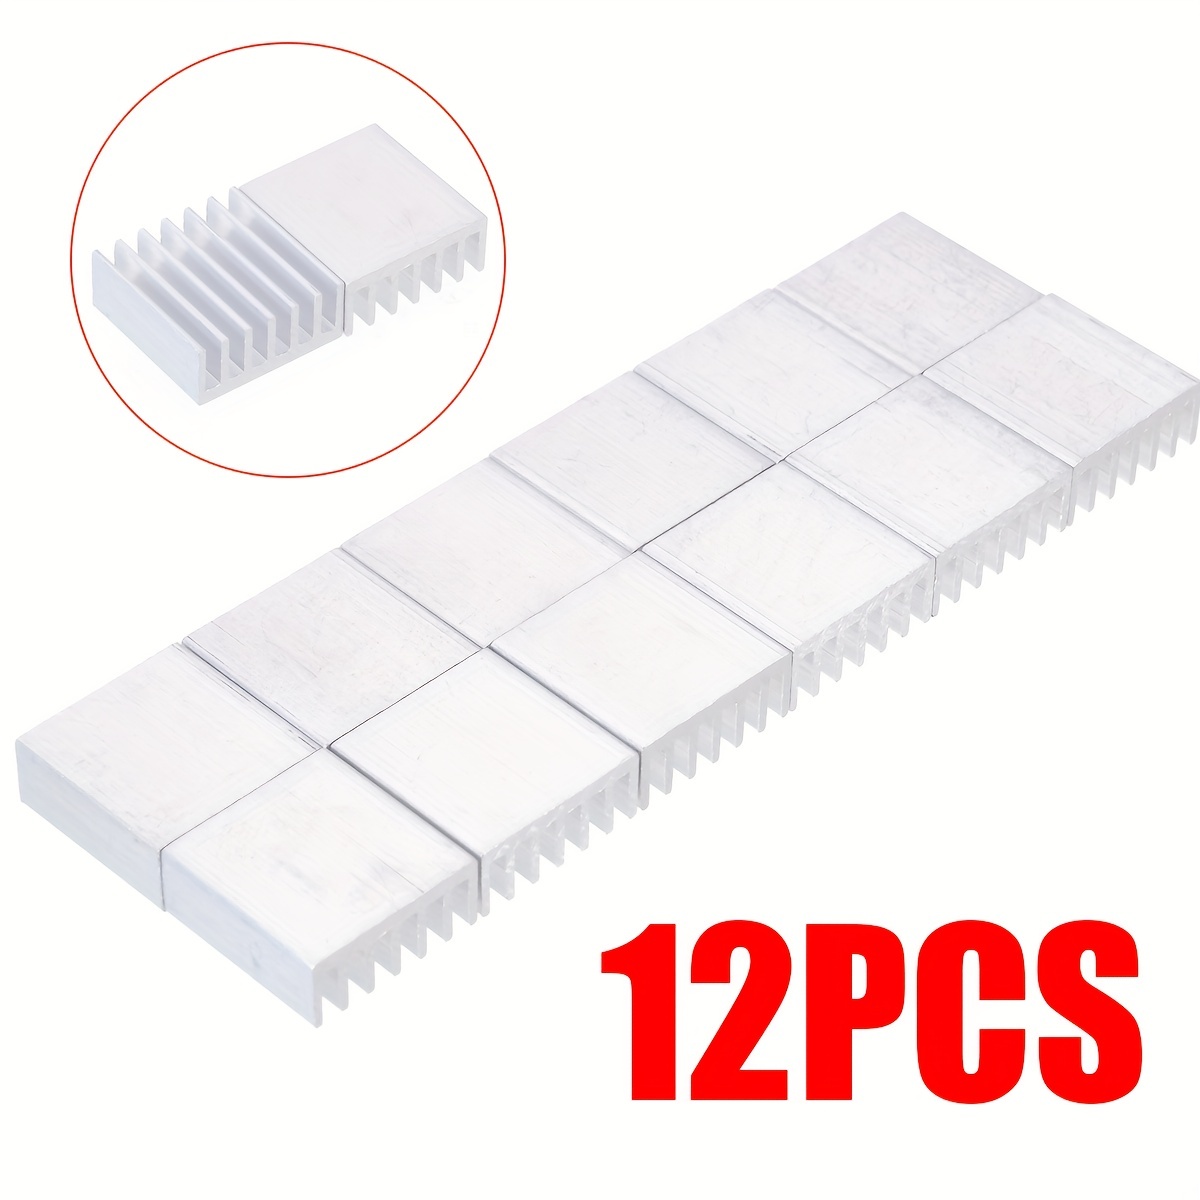 

12pcs Aluminum Heat Dissipation Block, Small Cooling Kit